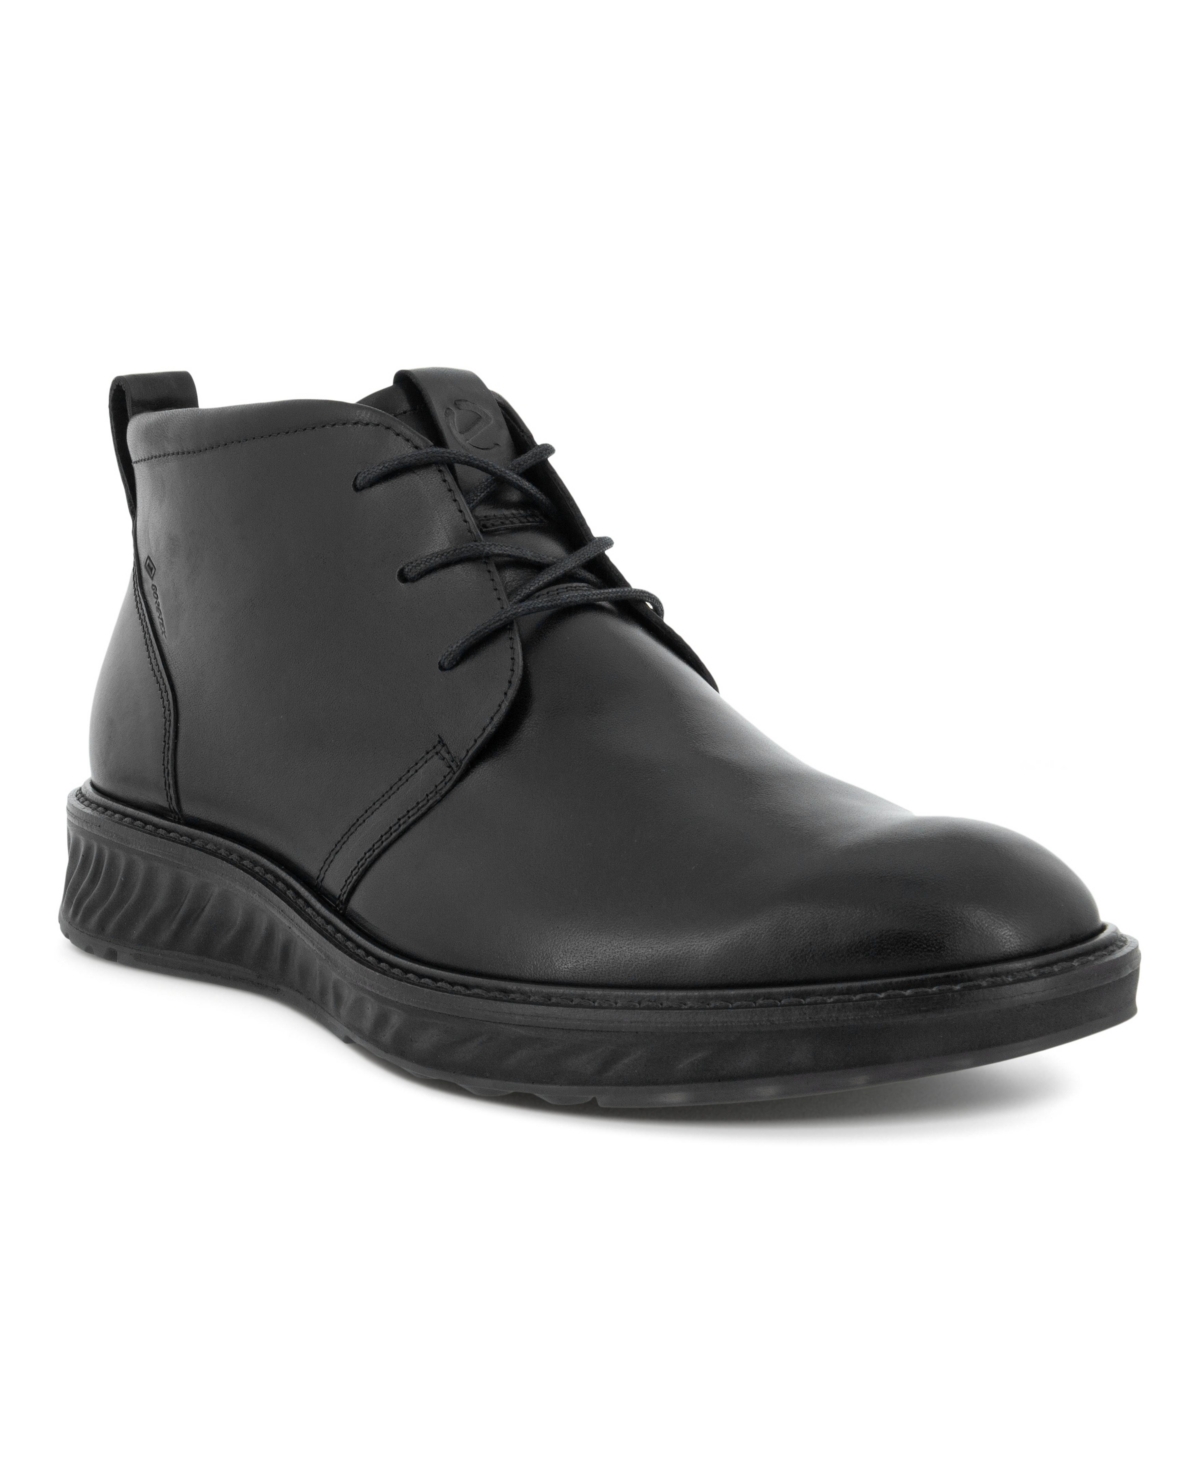 Men's St.1 Hybrid Gtx Boots - Black